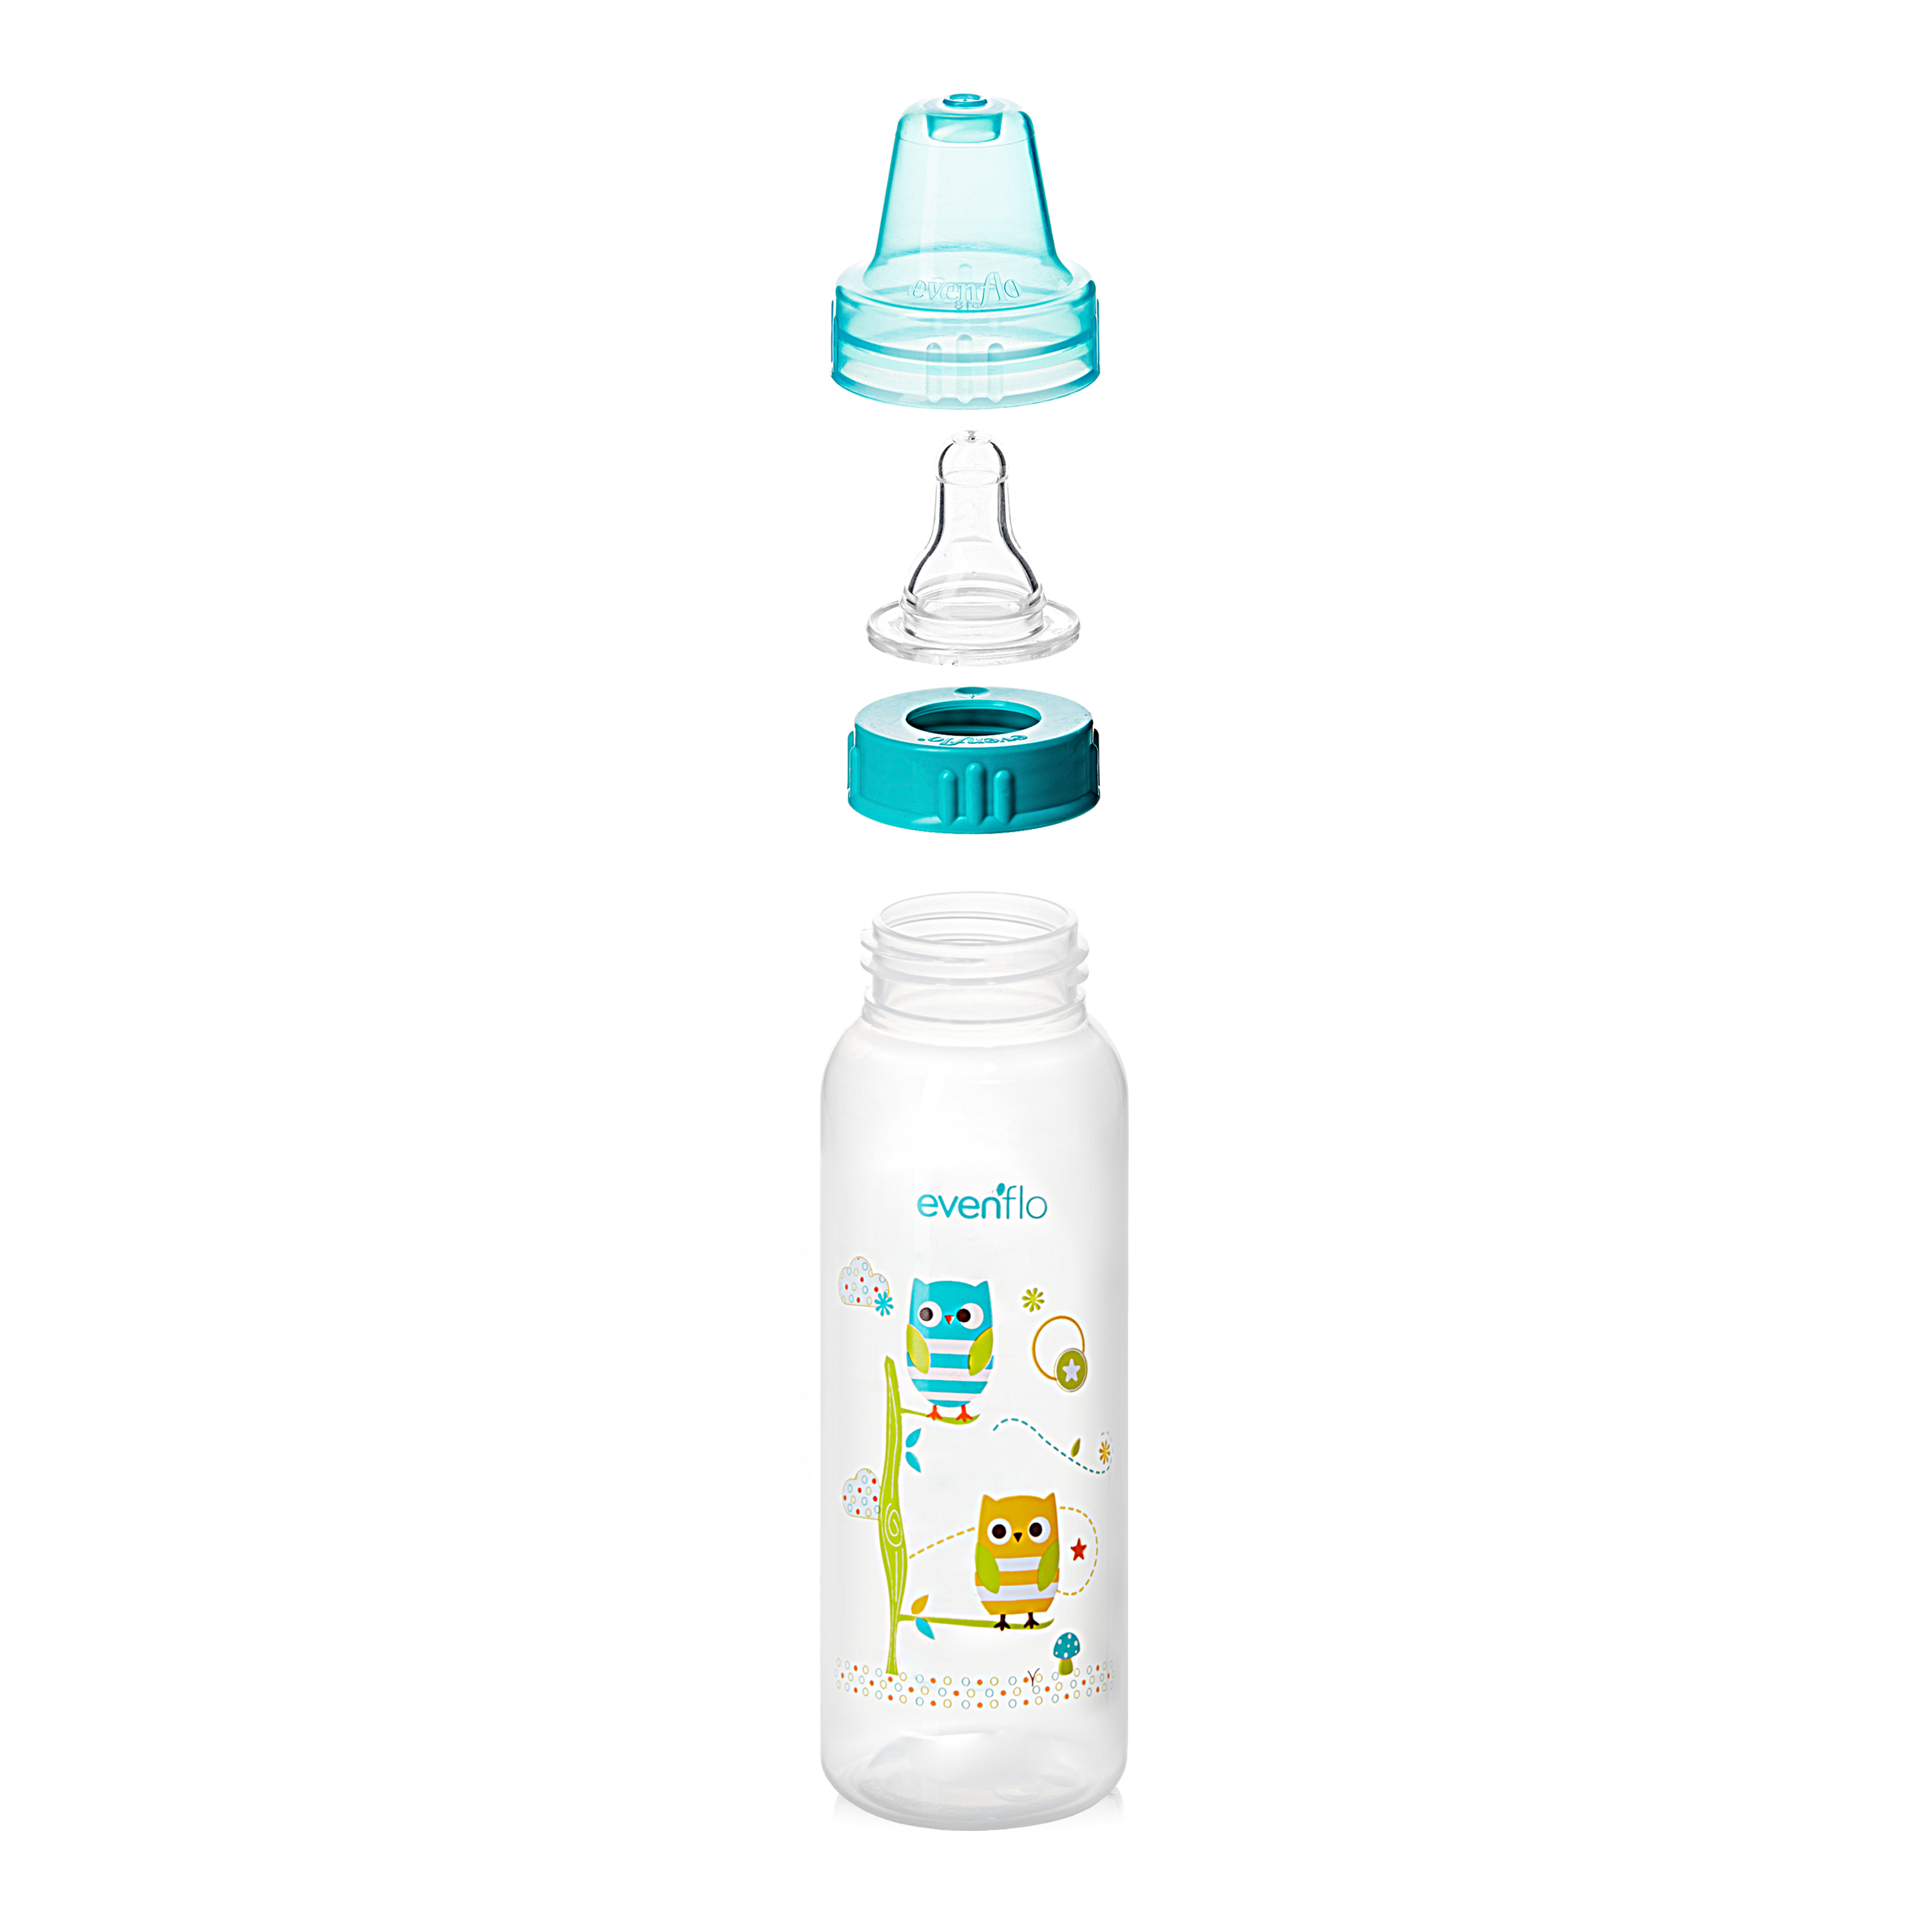 Evenflo Feeding Classic Prints Polypropylene Baby Bottle for Infant and Newborn, 8 oz (12 Pack) - image 2 of 5